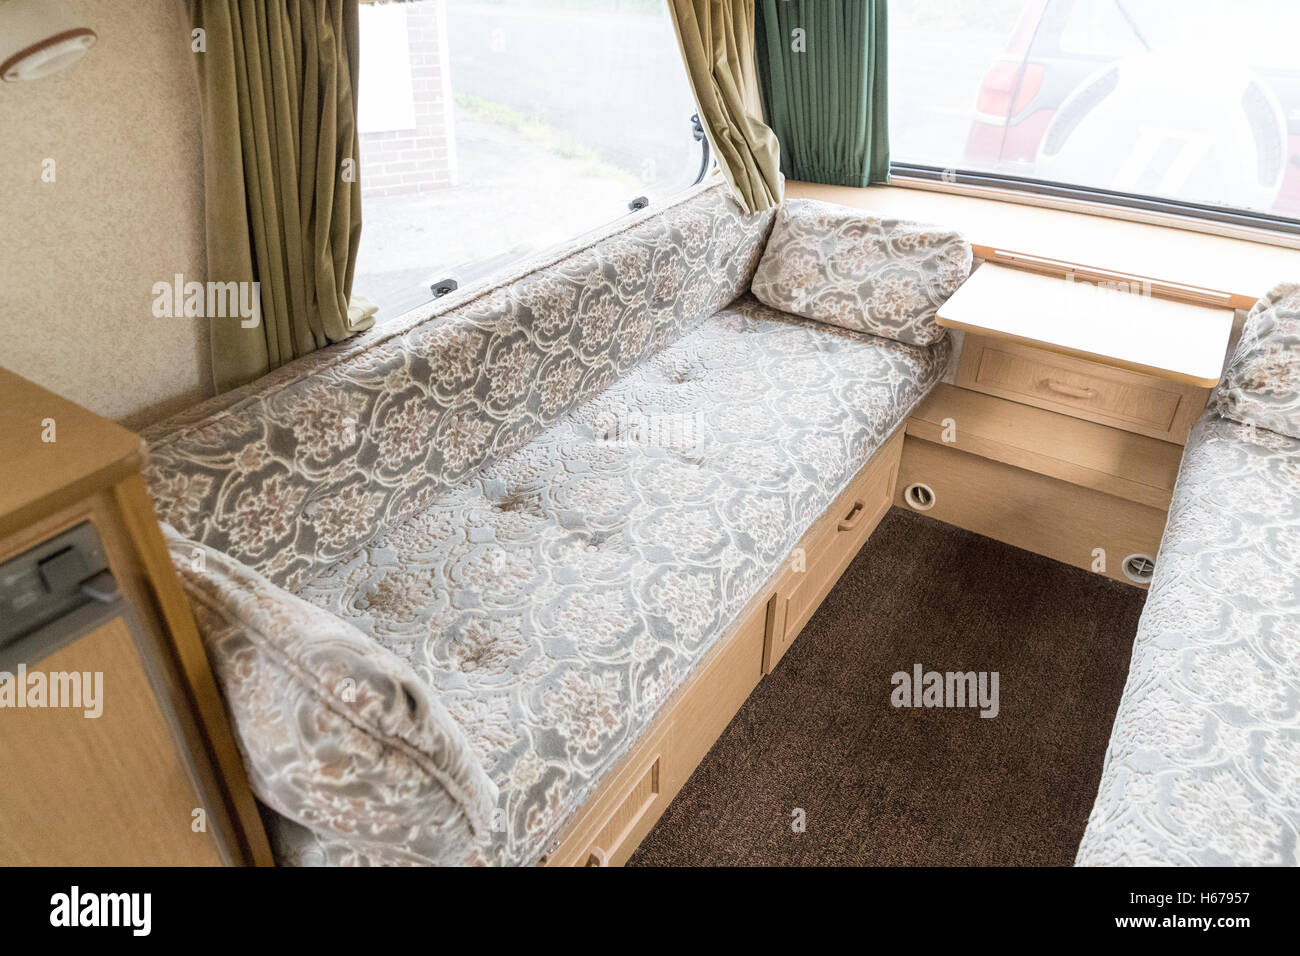 Interior of a caravan popular cheap family holiday home. Stock Photo